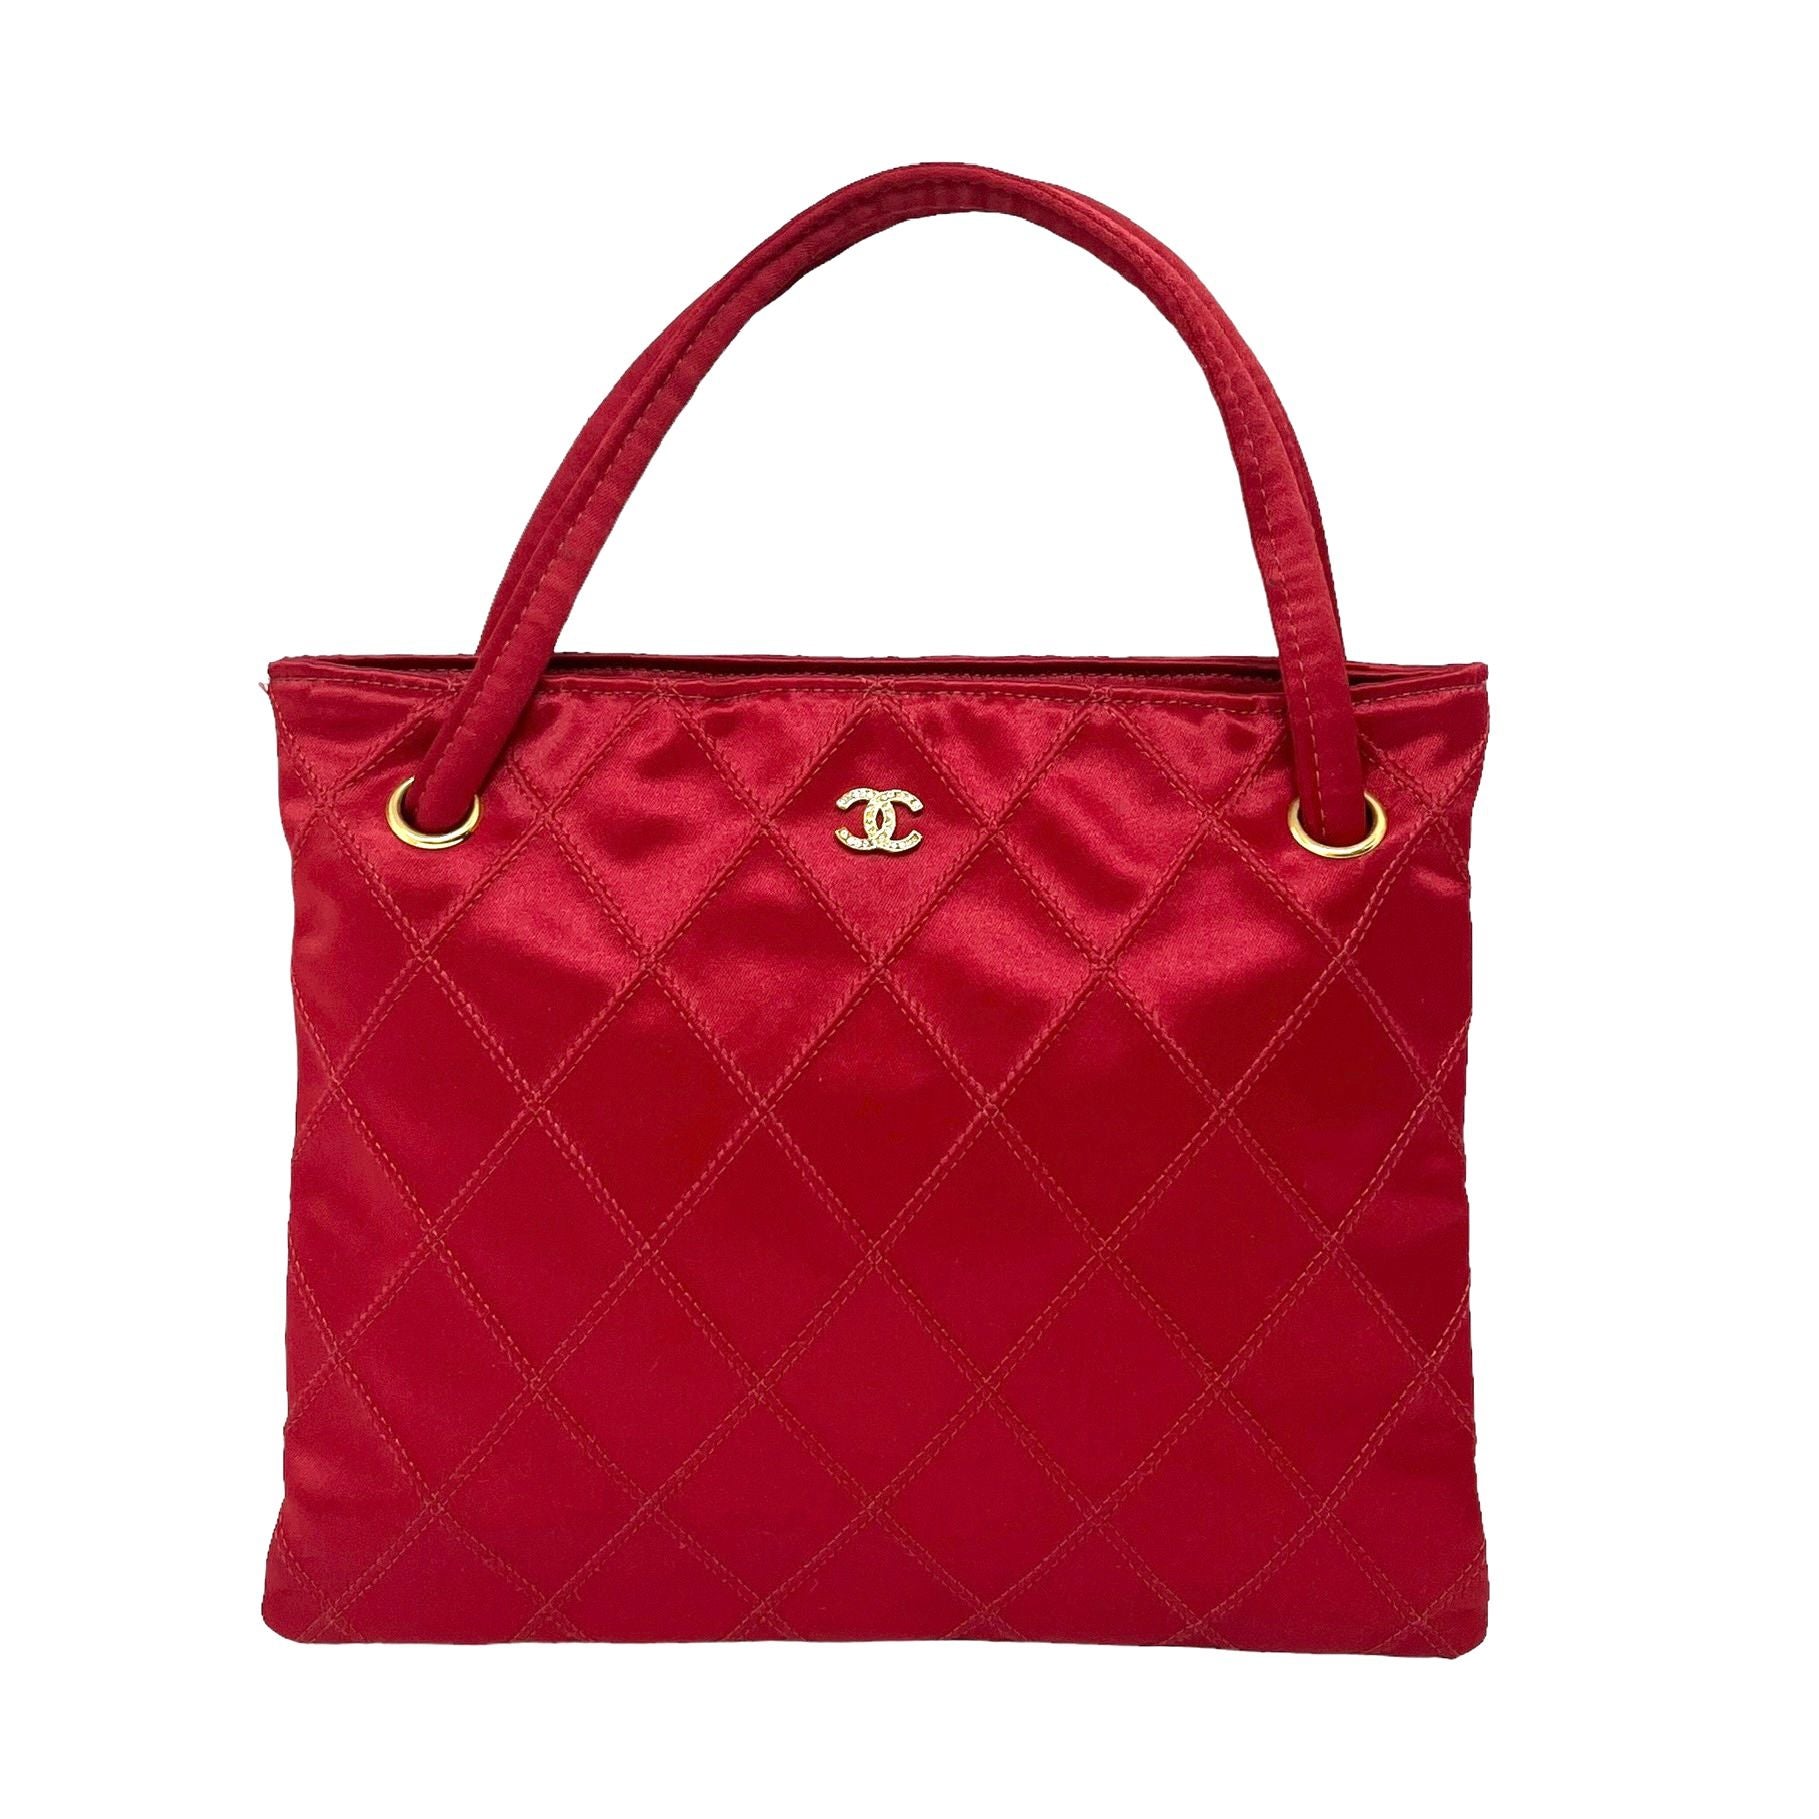 Chanel Red Satin Mini Bag